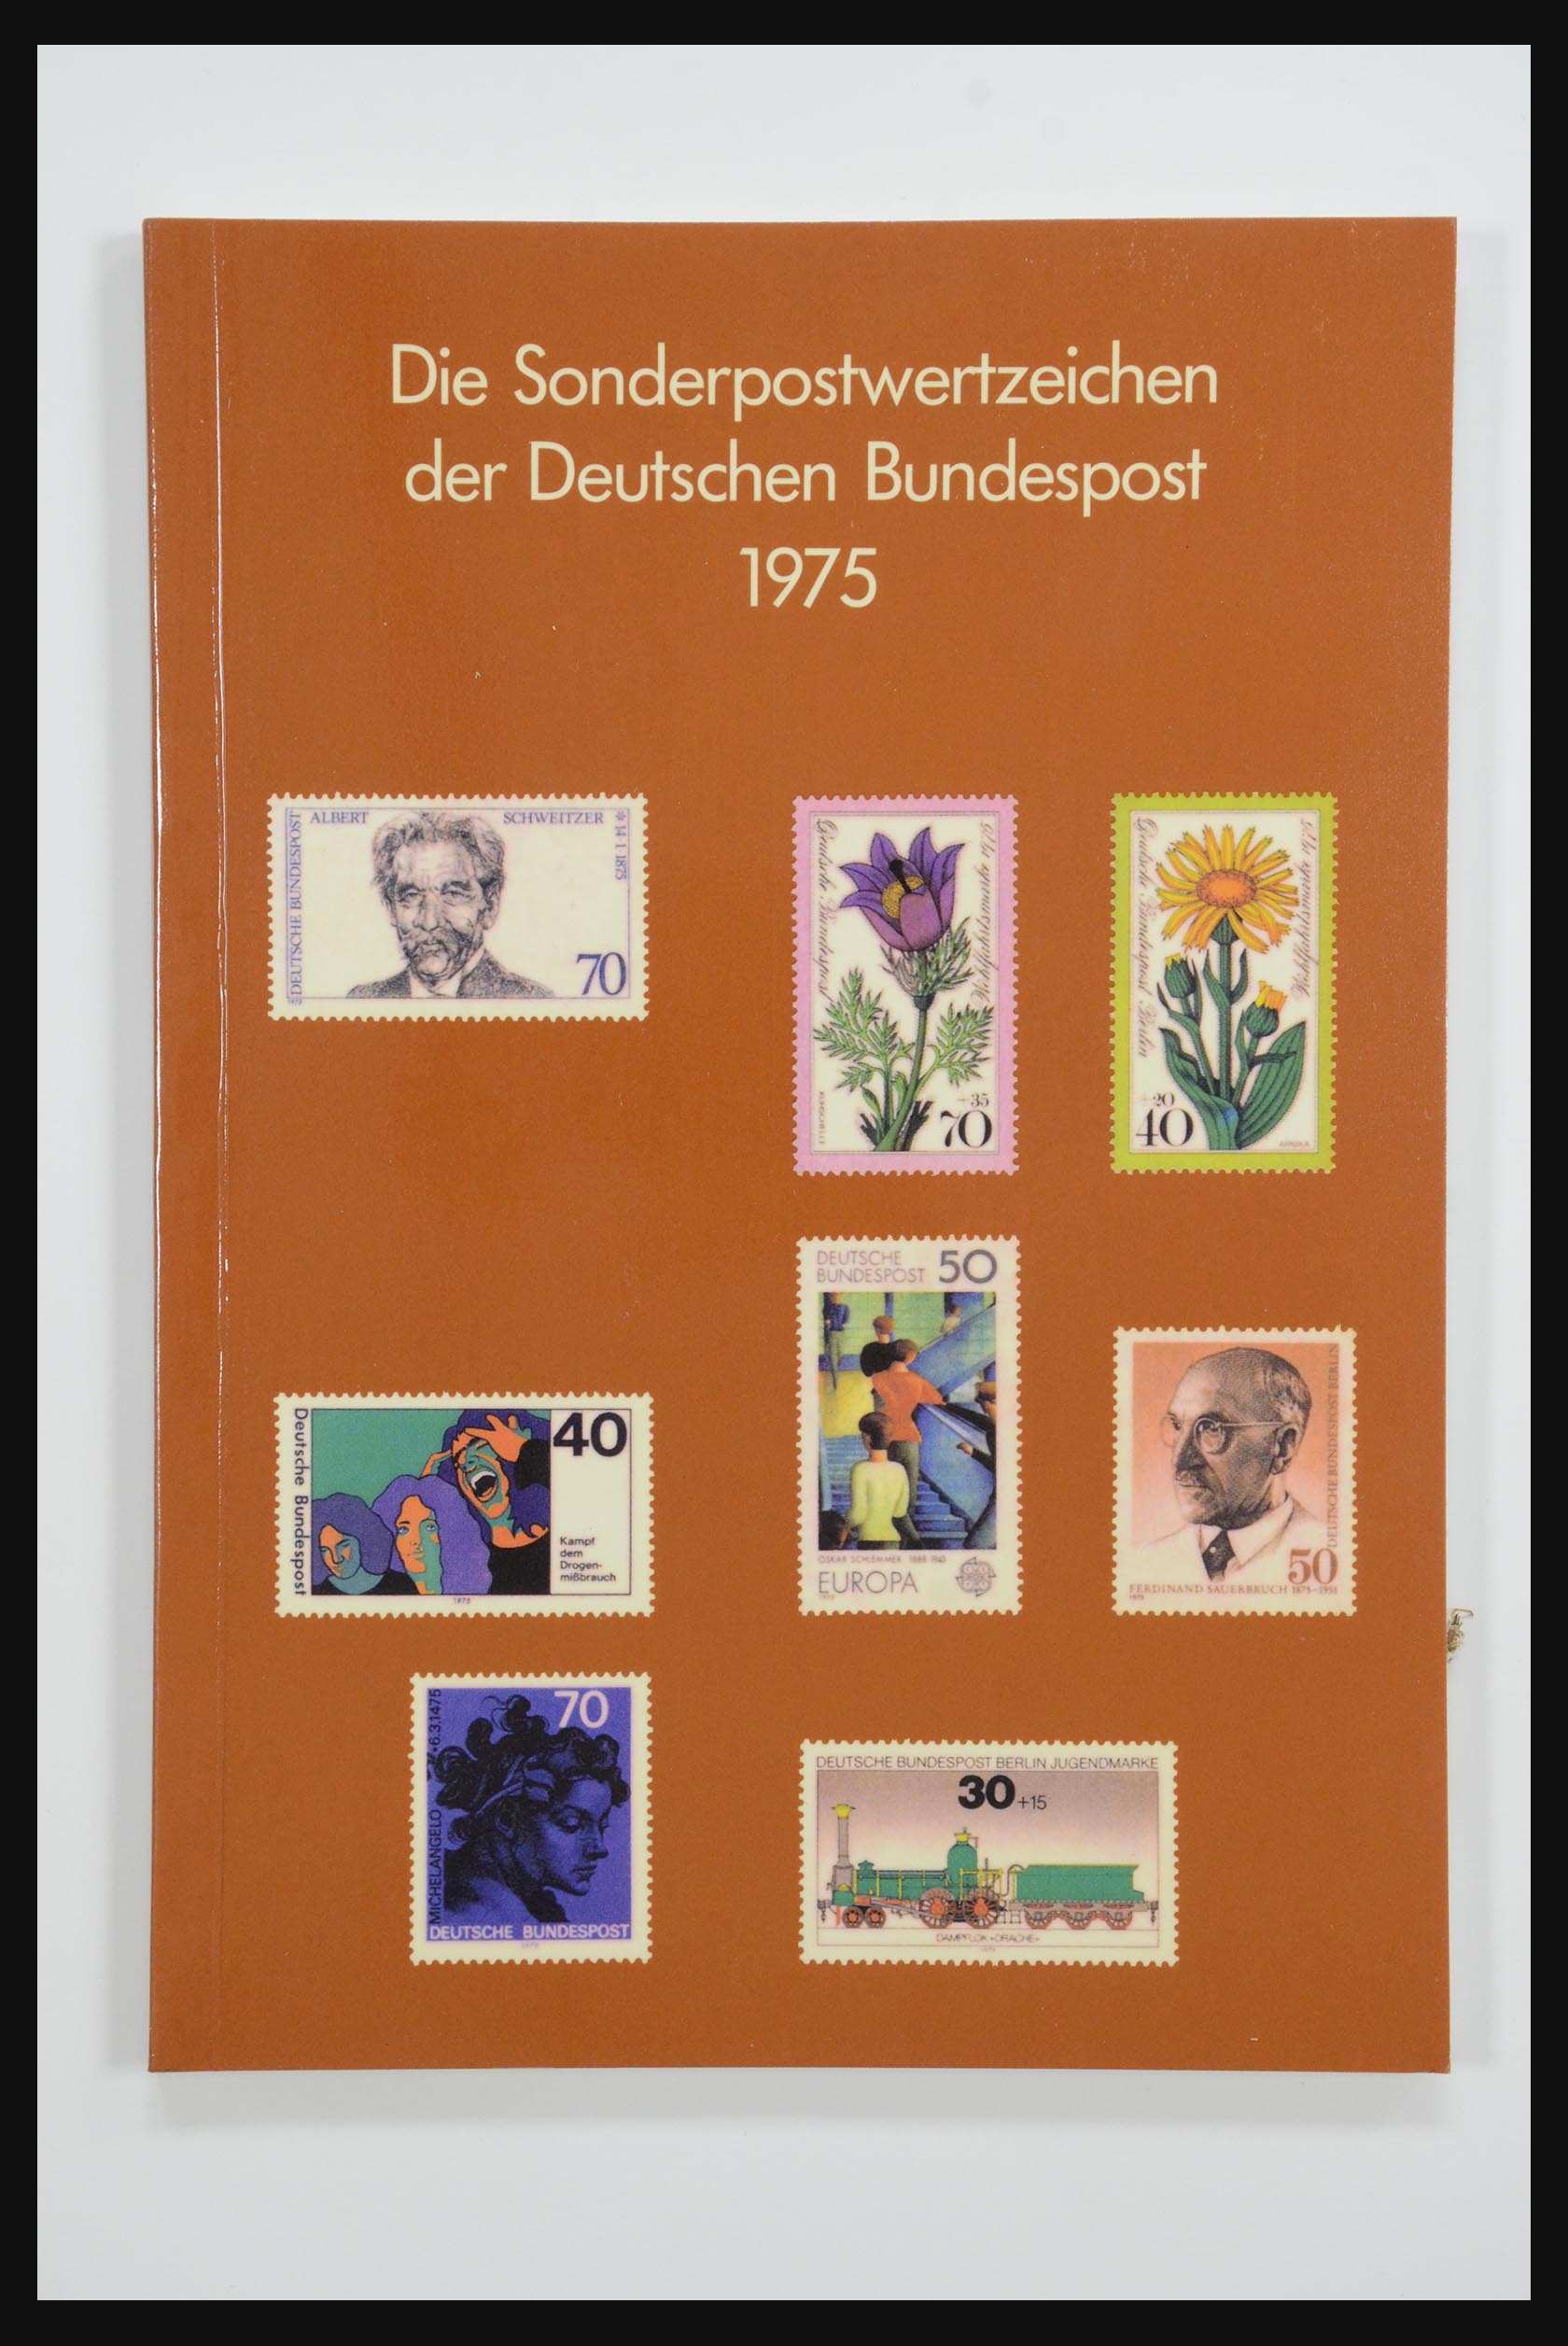 31836 003 - 31836 Bundespost yearbooks 1974-1999.